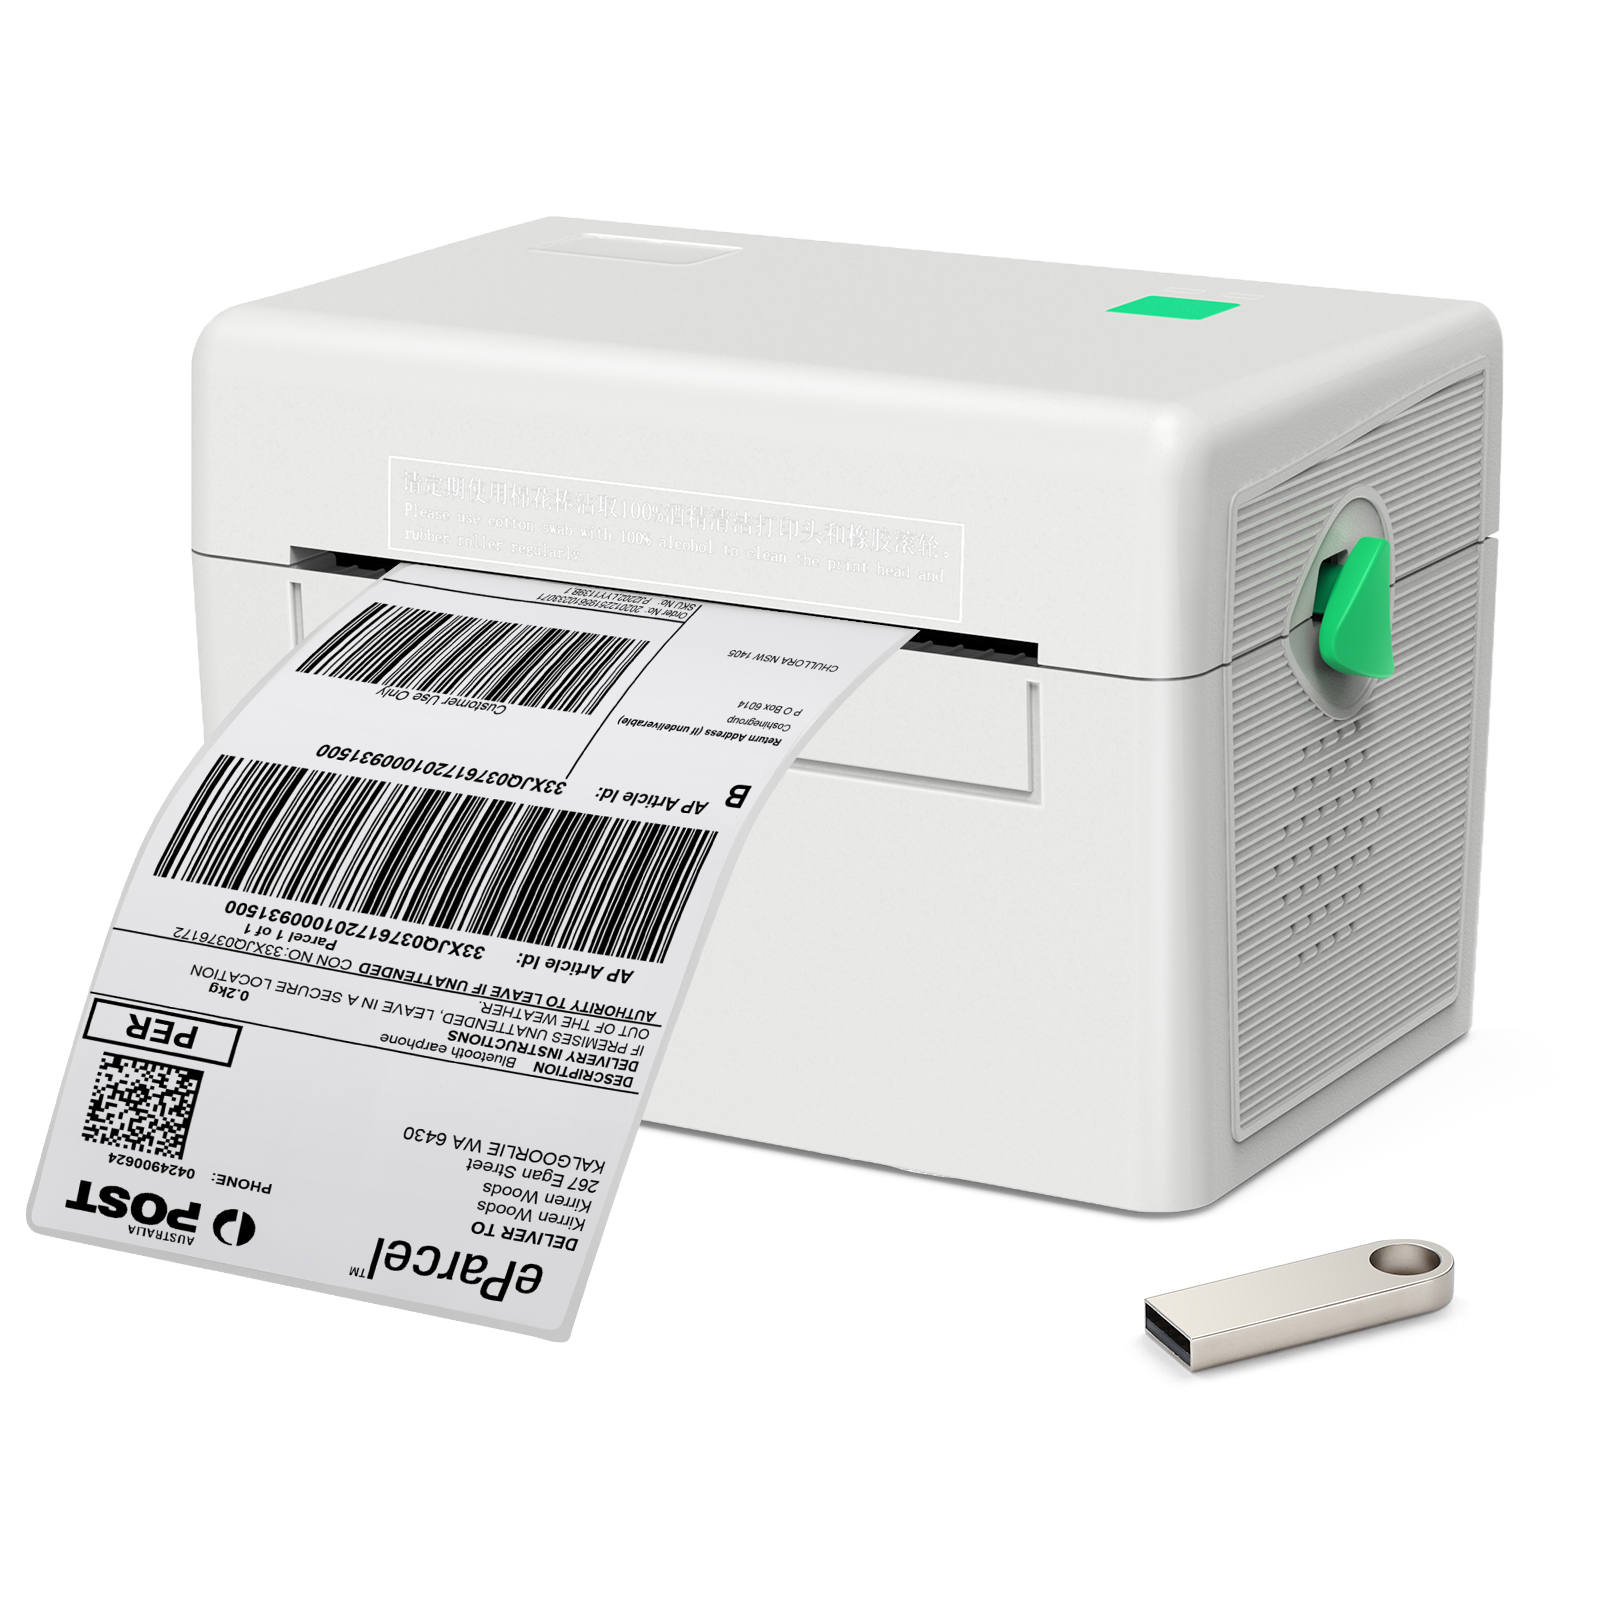 Evnvn 4x6 Direct Thermal Label Printer, USB Shipping Paper Printer